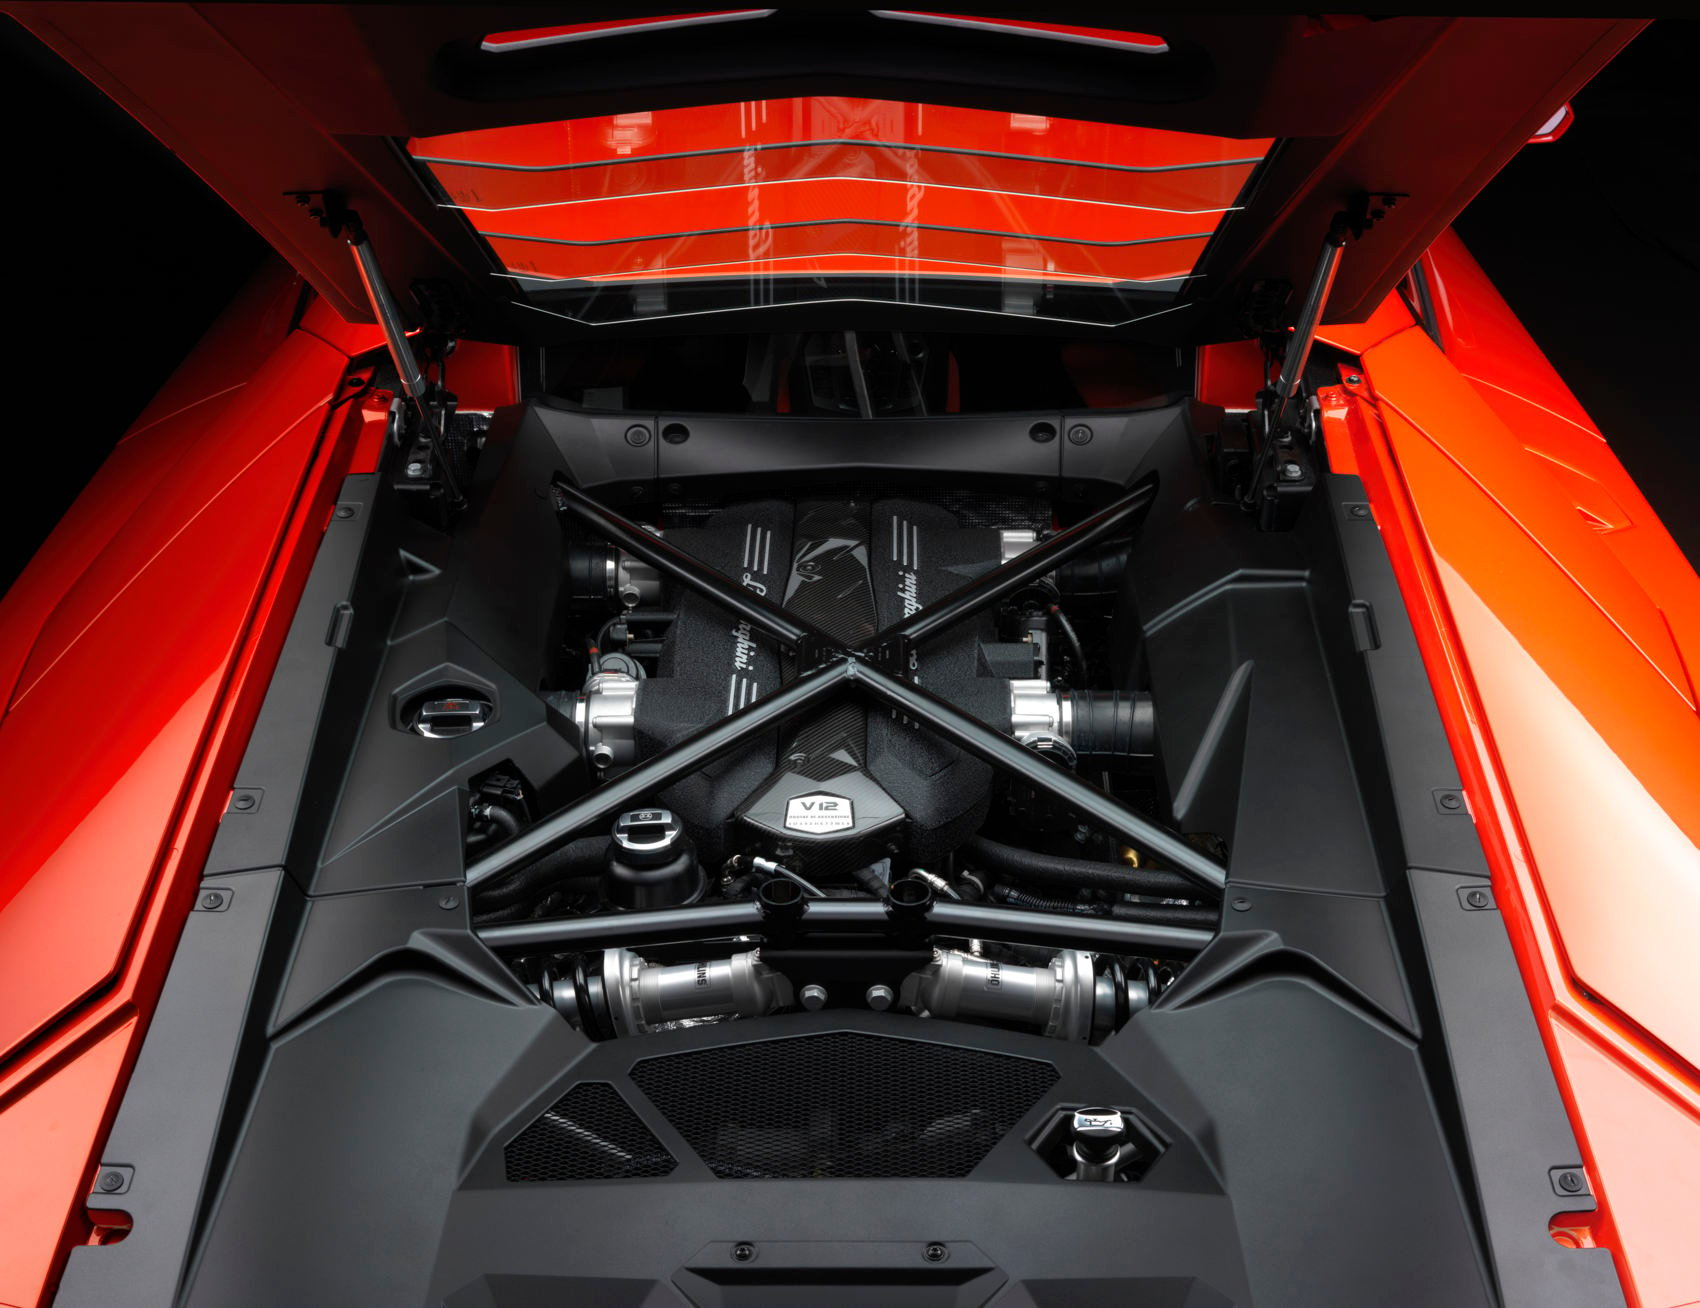 Lamborghini Aventador V12 engine